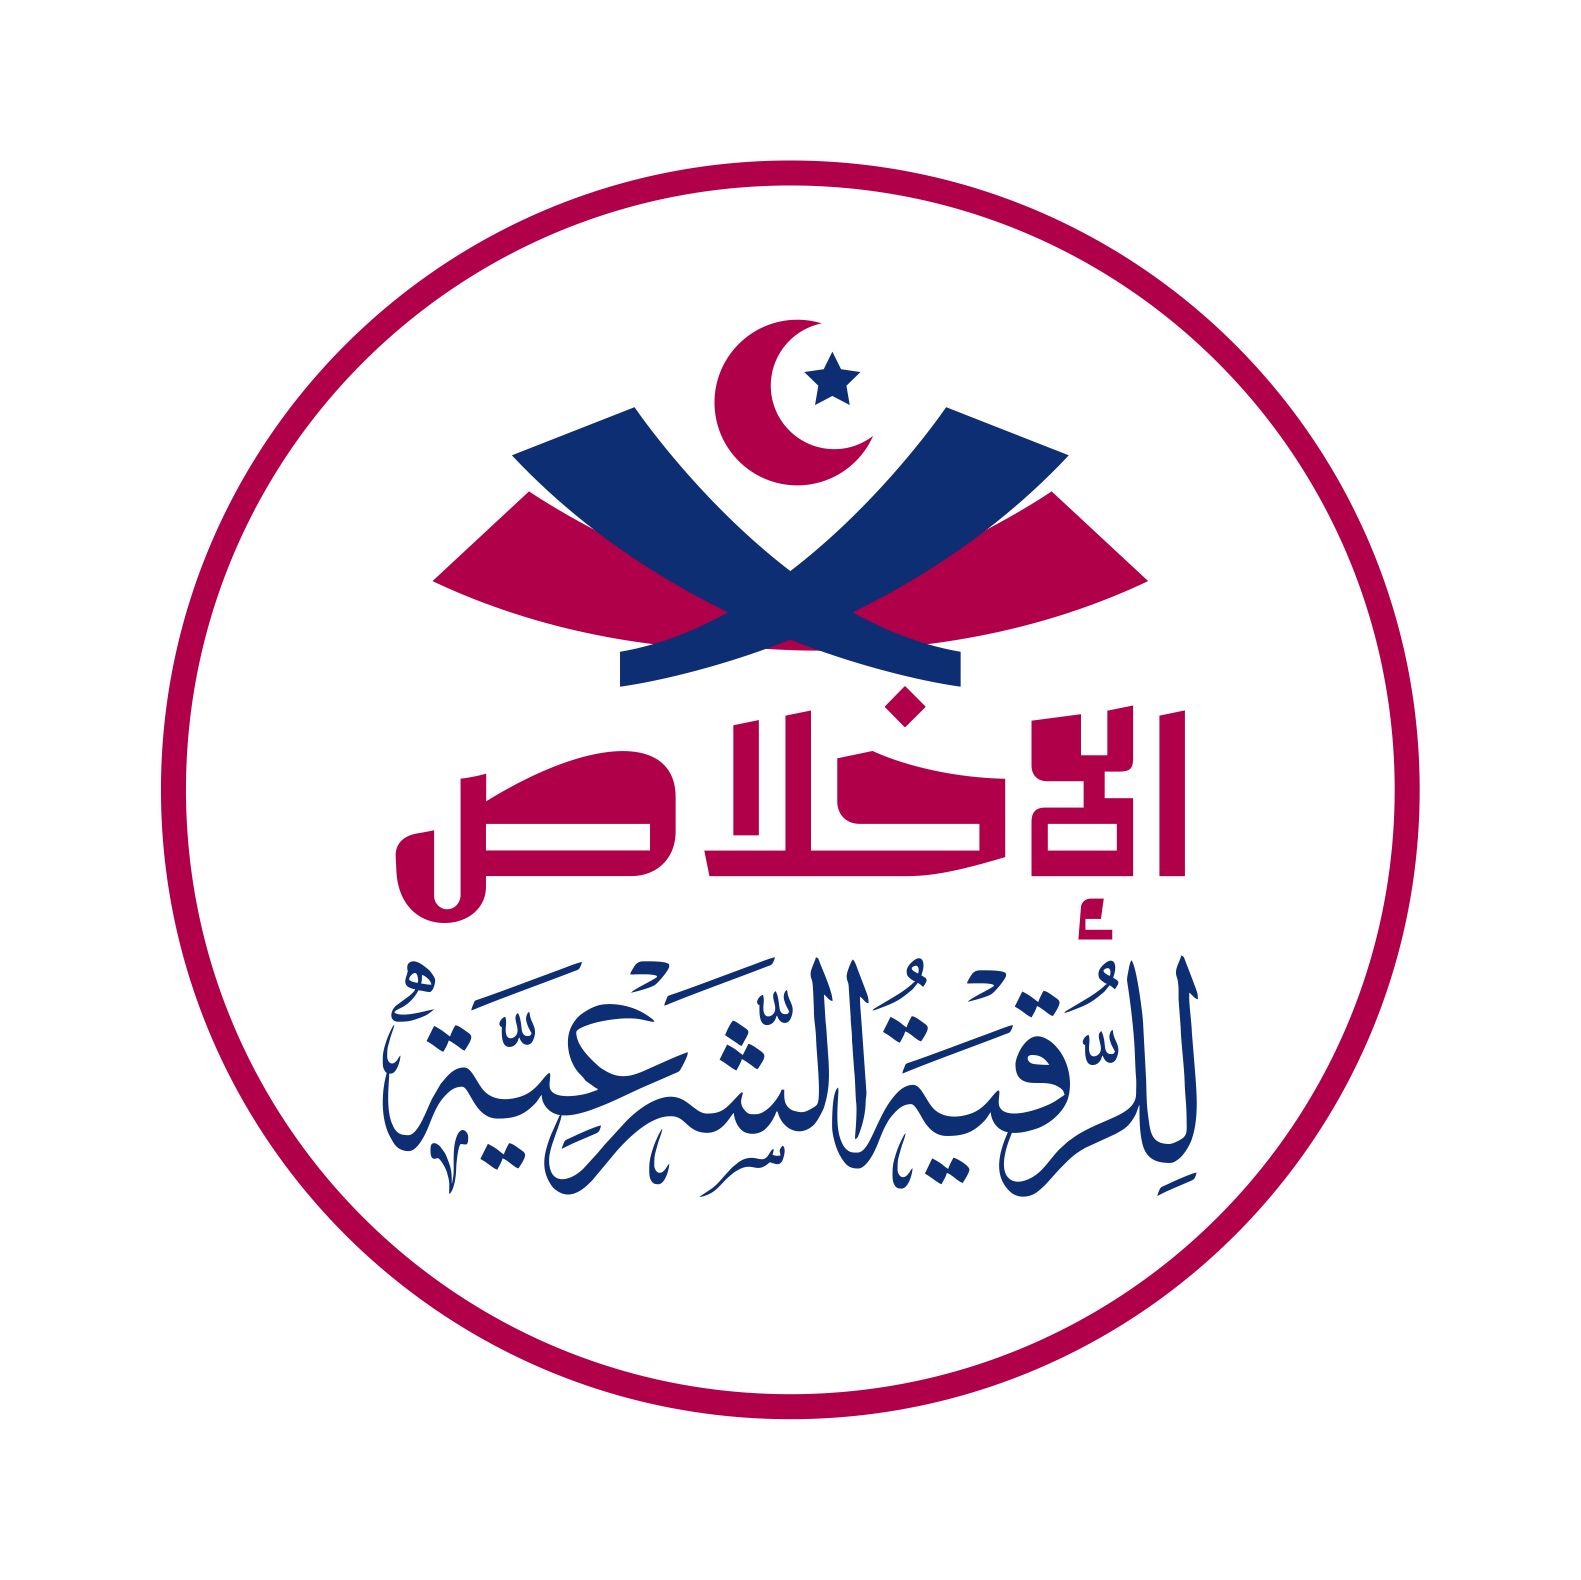 Sincerity-Ruqyah-logo.jpg